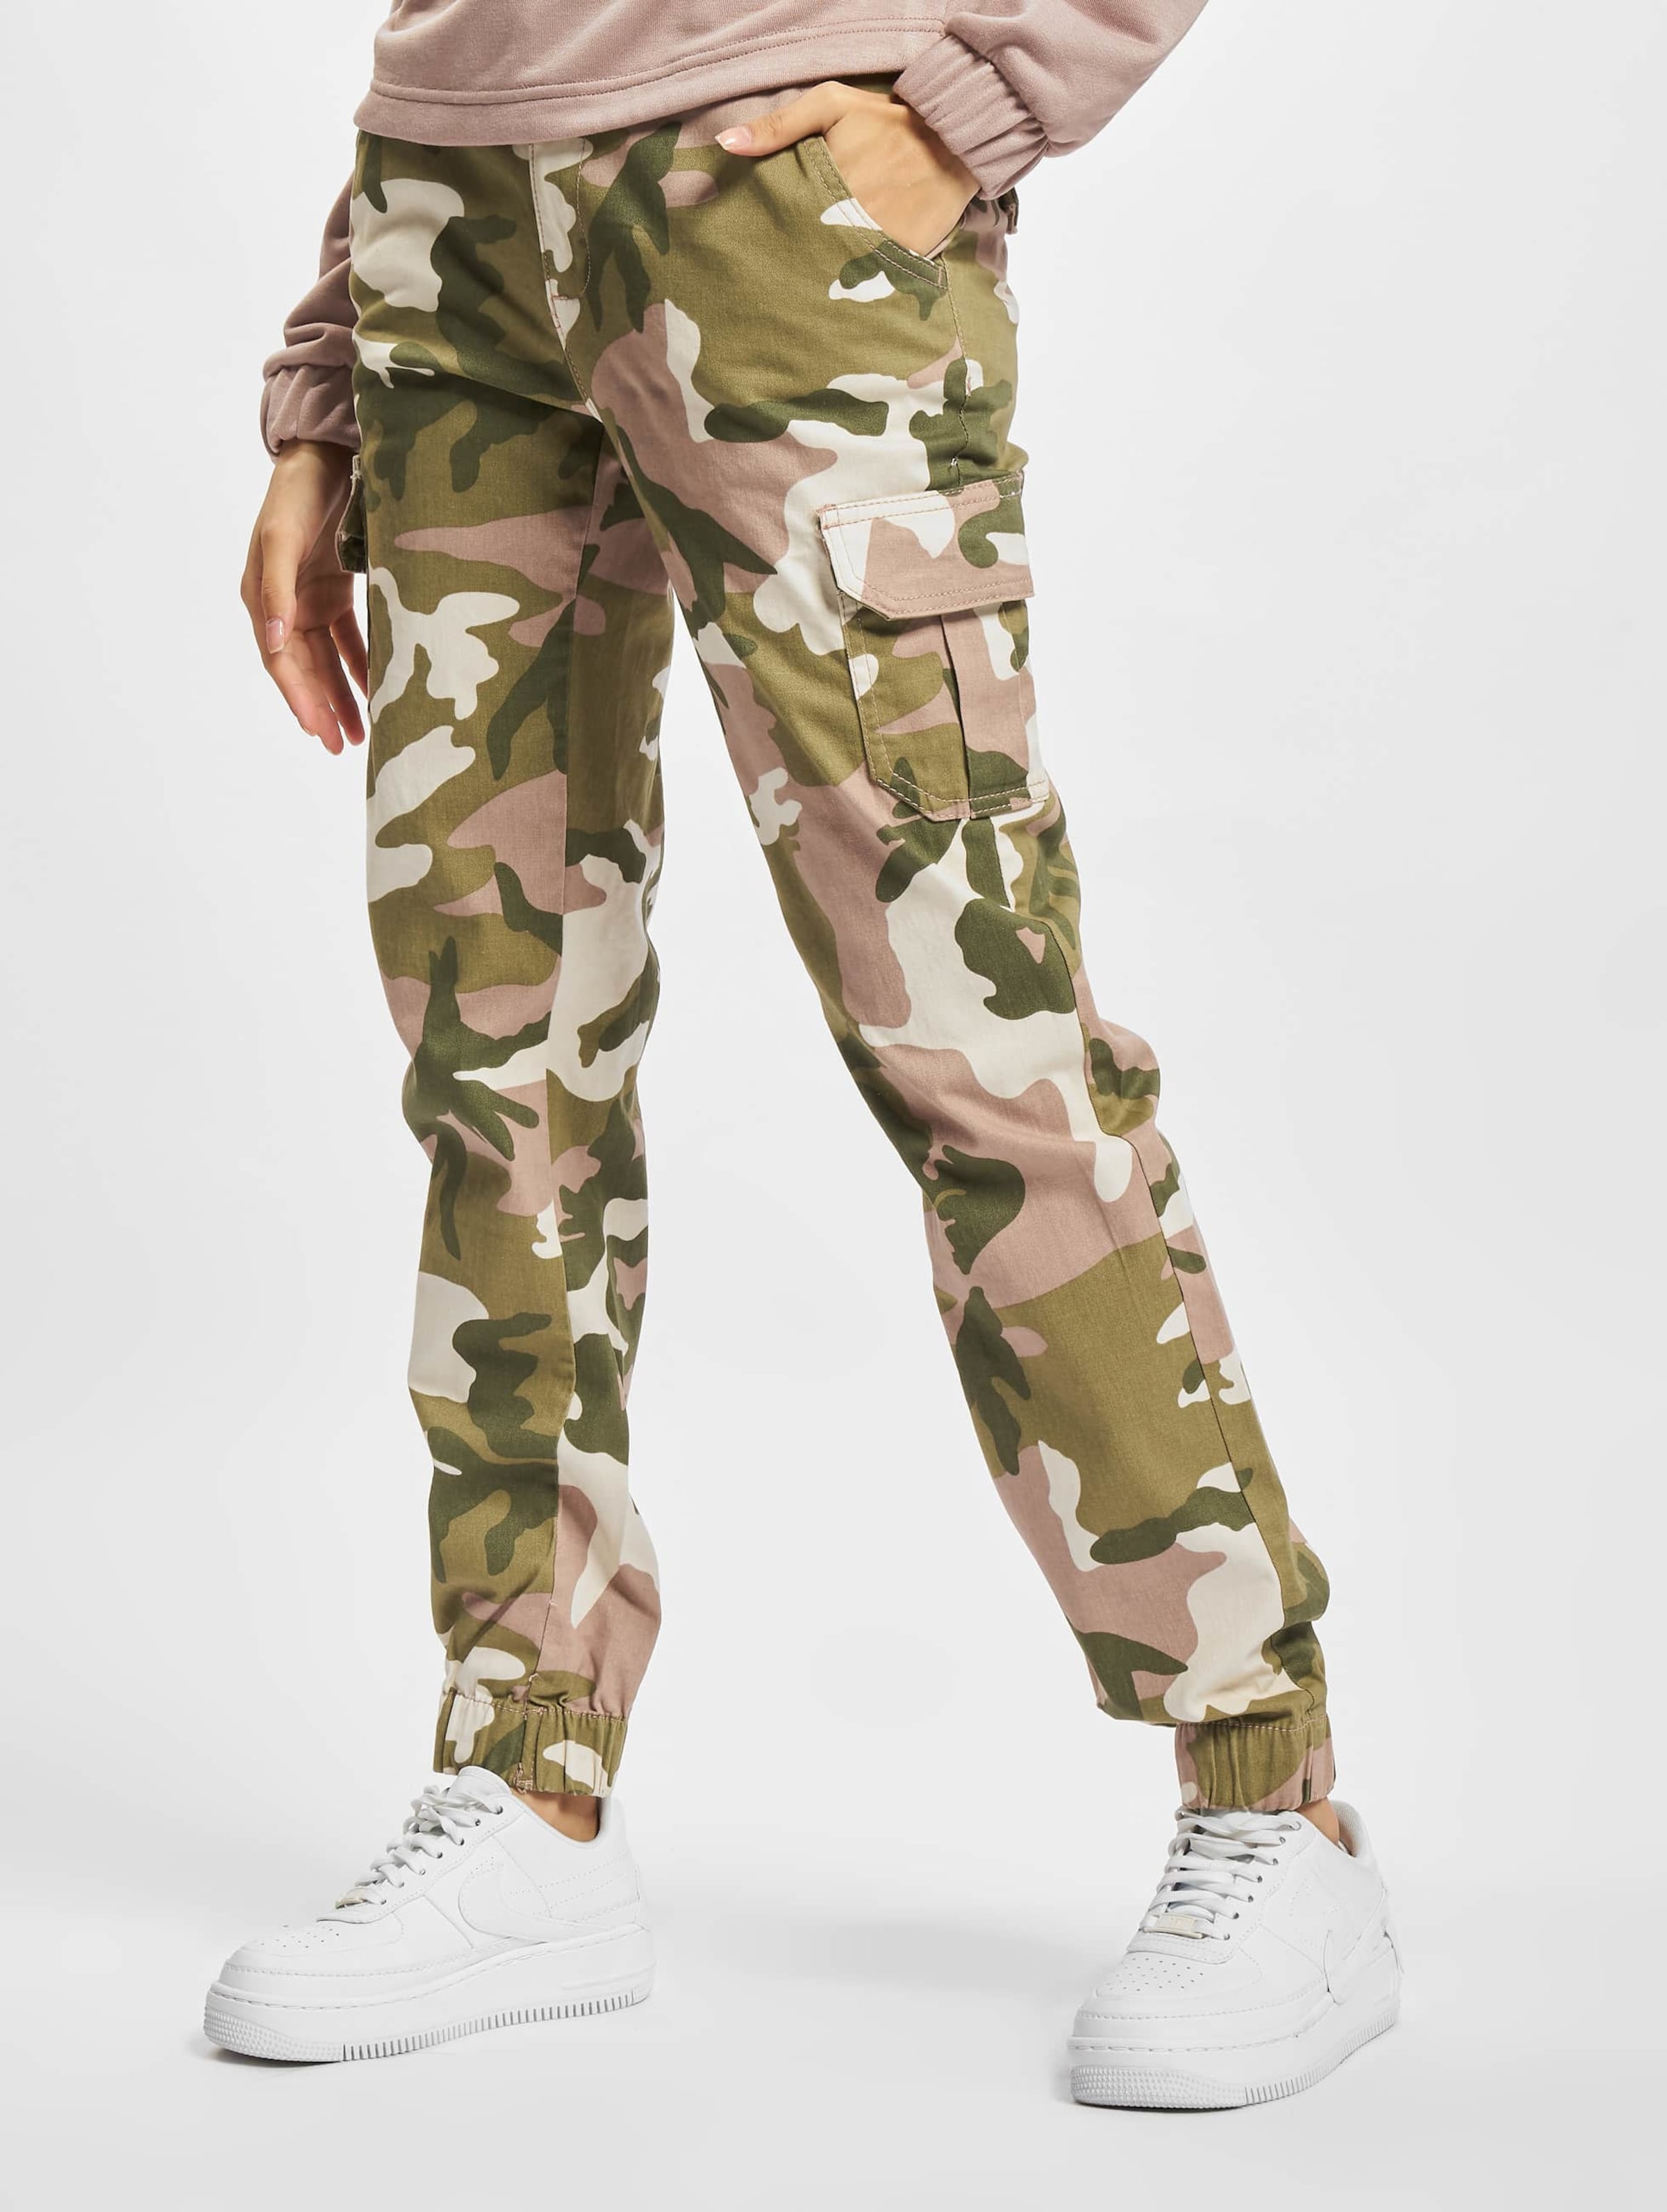 LW Camo Print Side Pocket Cargo Camouflage Pants Low-Waist Zipper Fly Full  Print Stretchy women trousers Camo Print Casual Pants - AliExpress